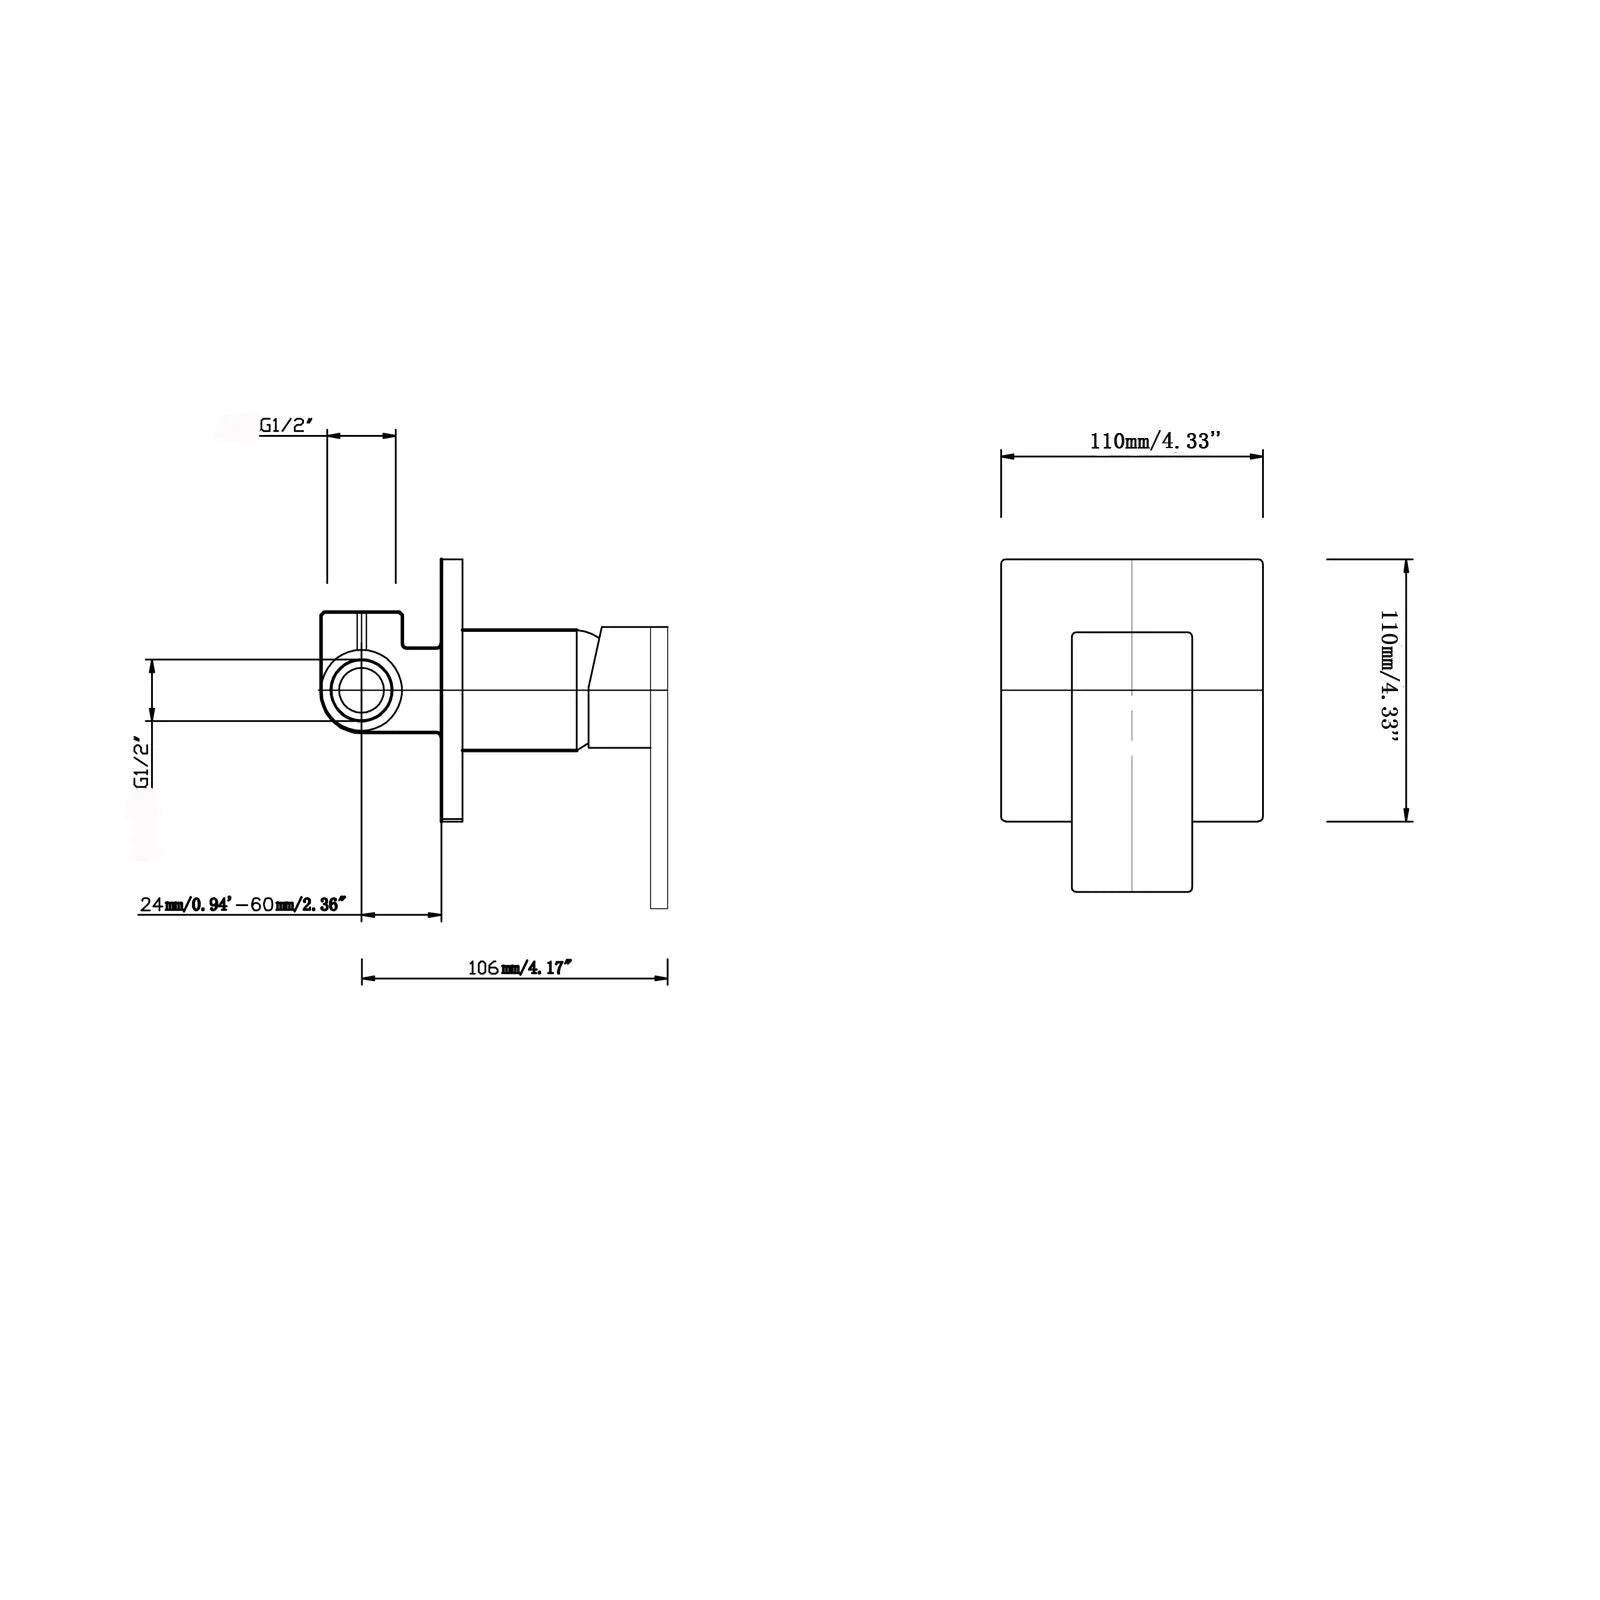 Blaze Shower Wall Mixer: Elegant Design for Stylish Bathroom Functionality-Chrome-CH0106_ST, 2